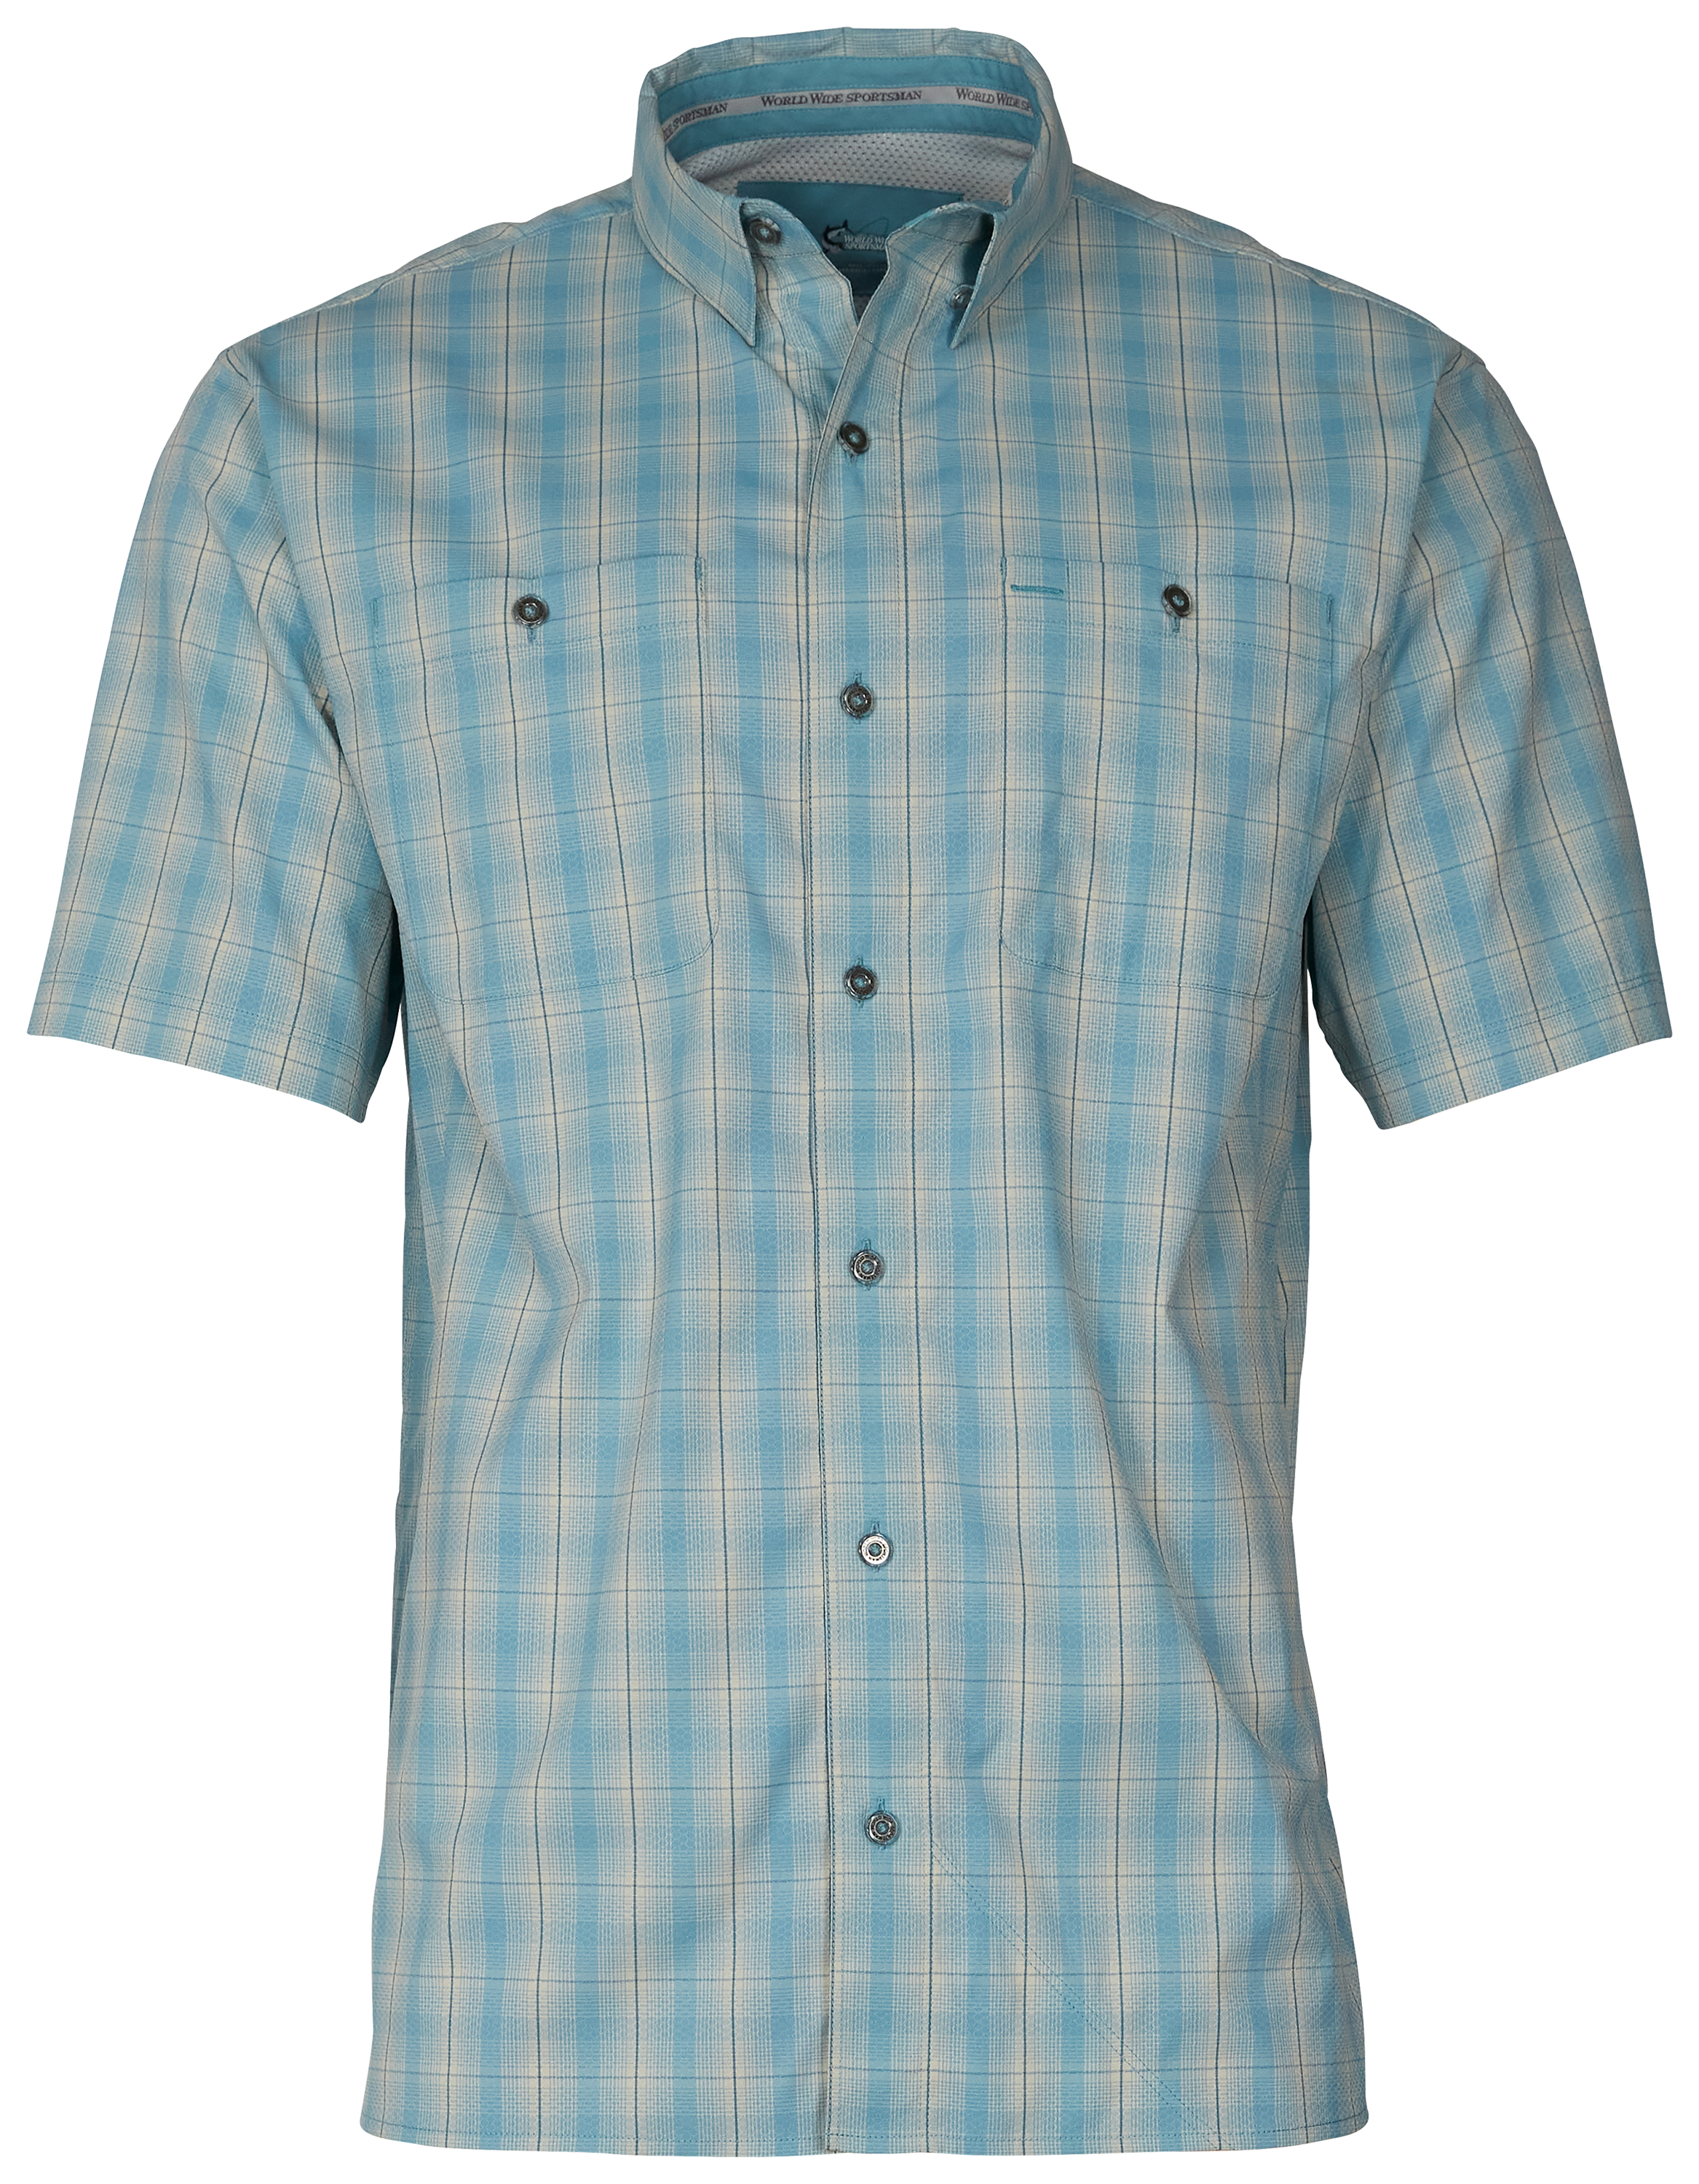 World Wide Sportsman Ultimate Angler Plaid Short-Sleeve Shirt for Men - Fading Ripple Plaid - XL